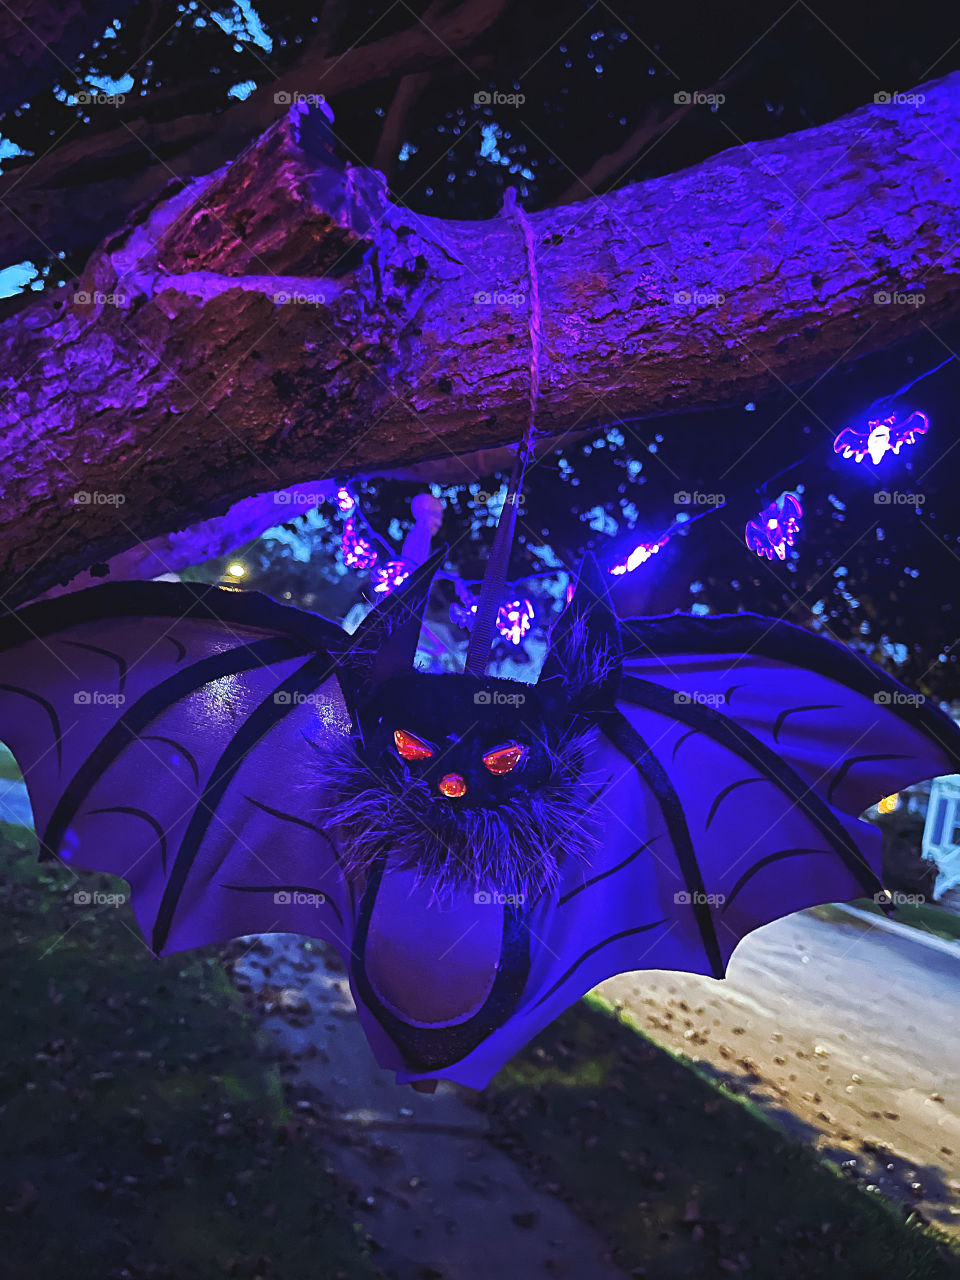 Halloween bat ornament hanging on a tree